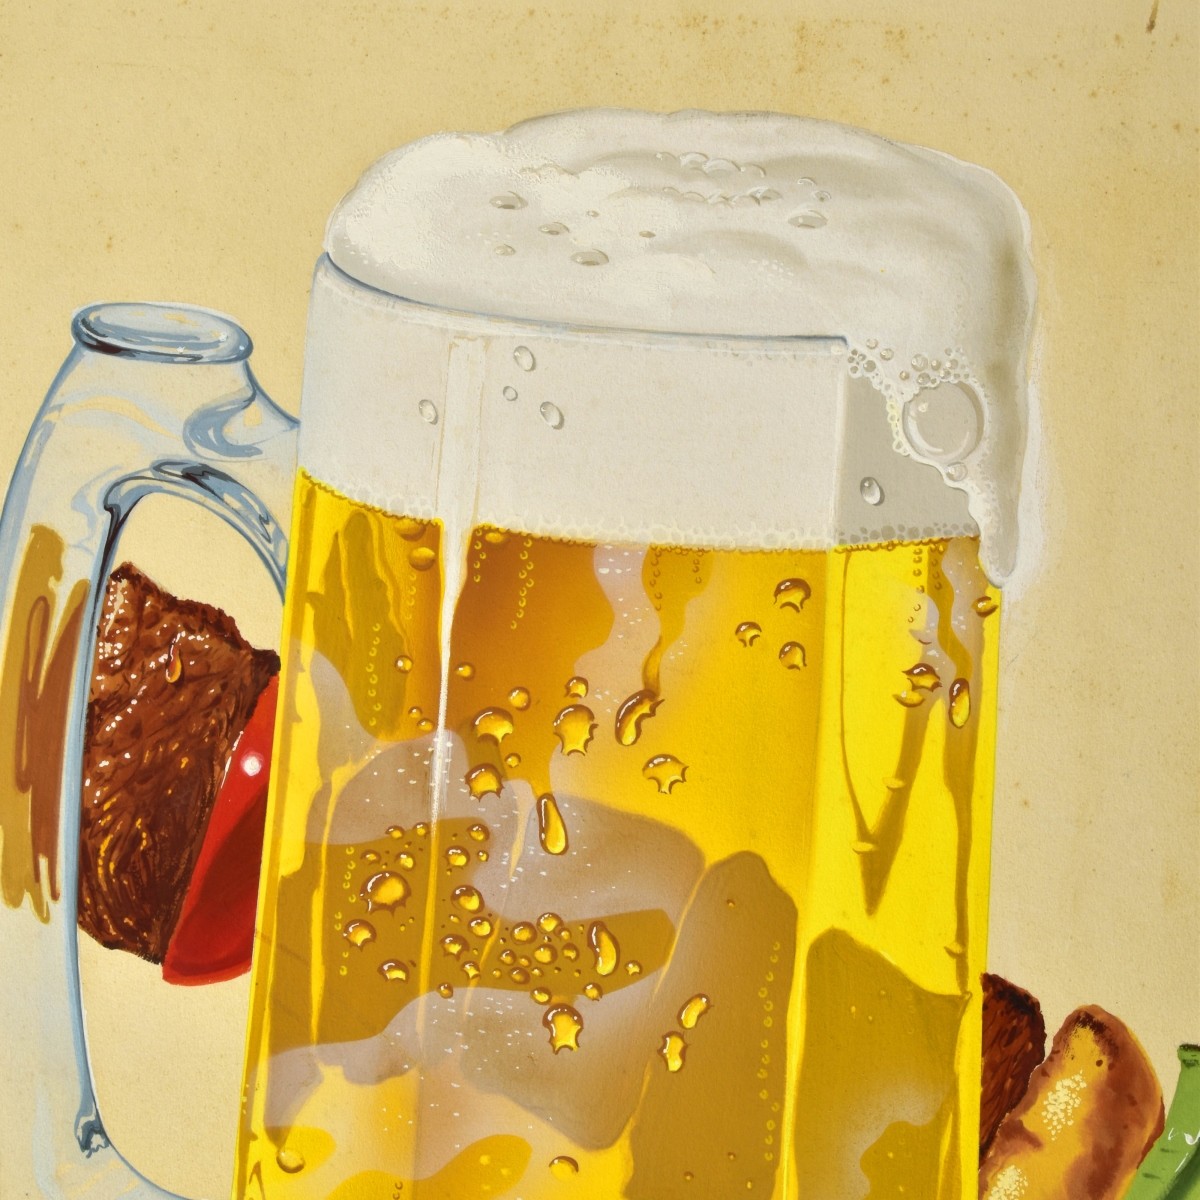 1960's Magazine Illustration "BBQ and Beer"